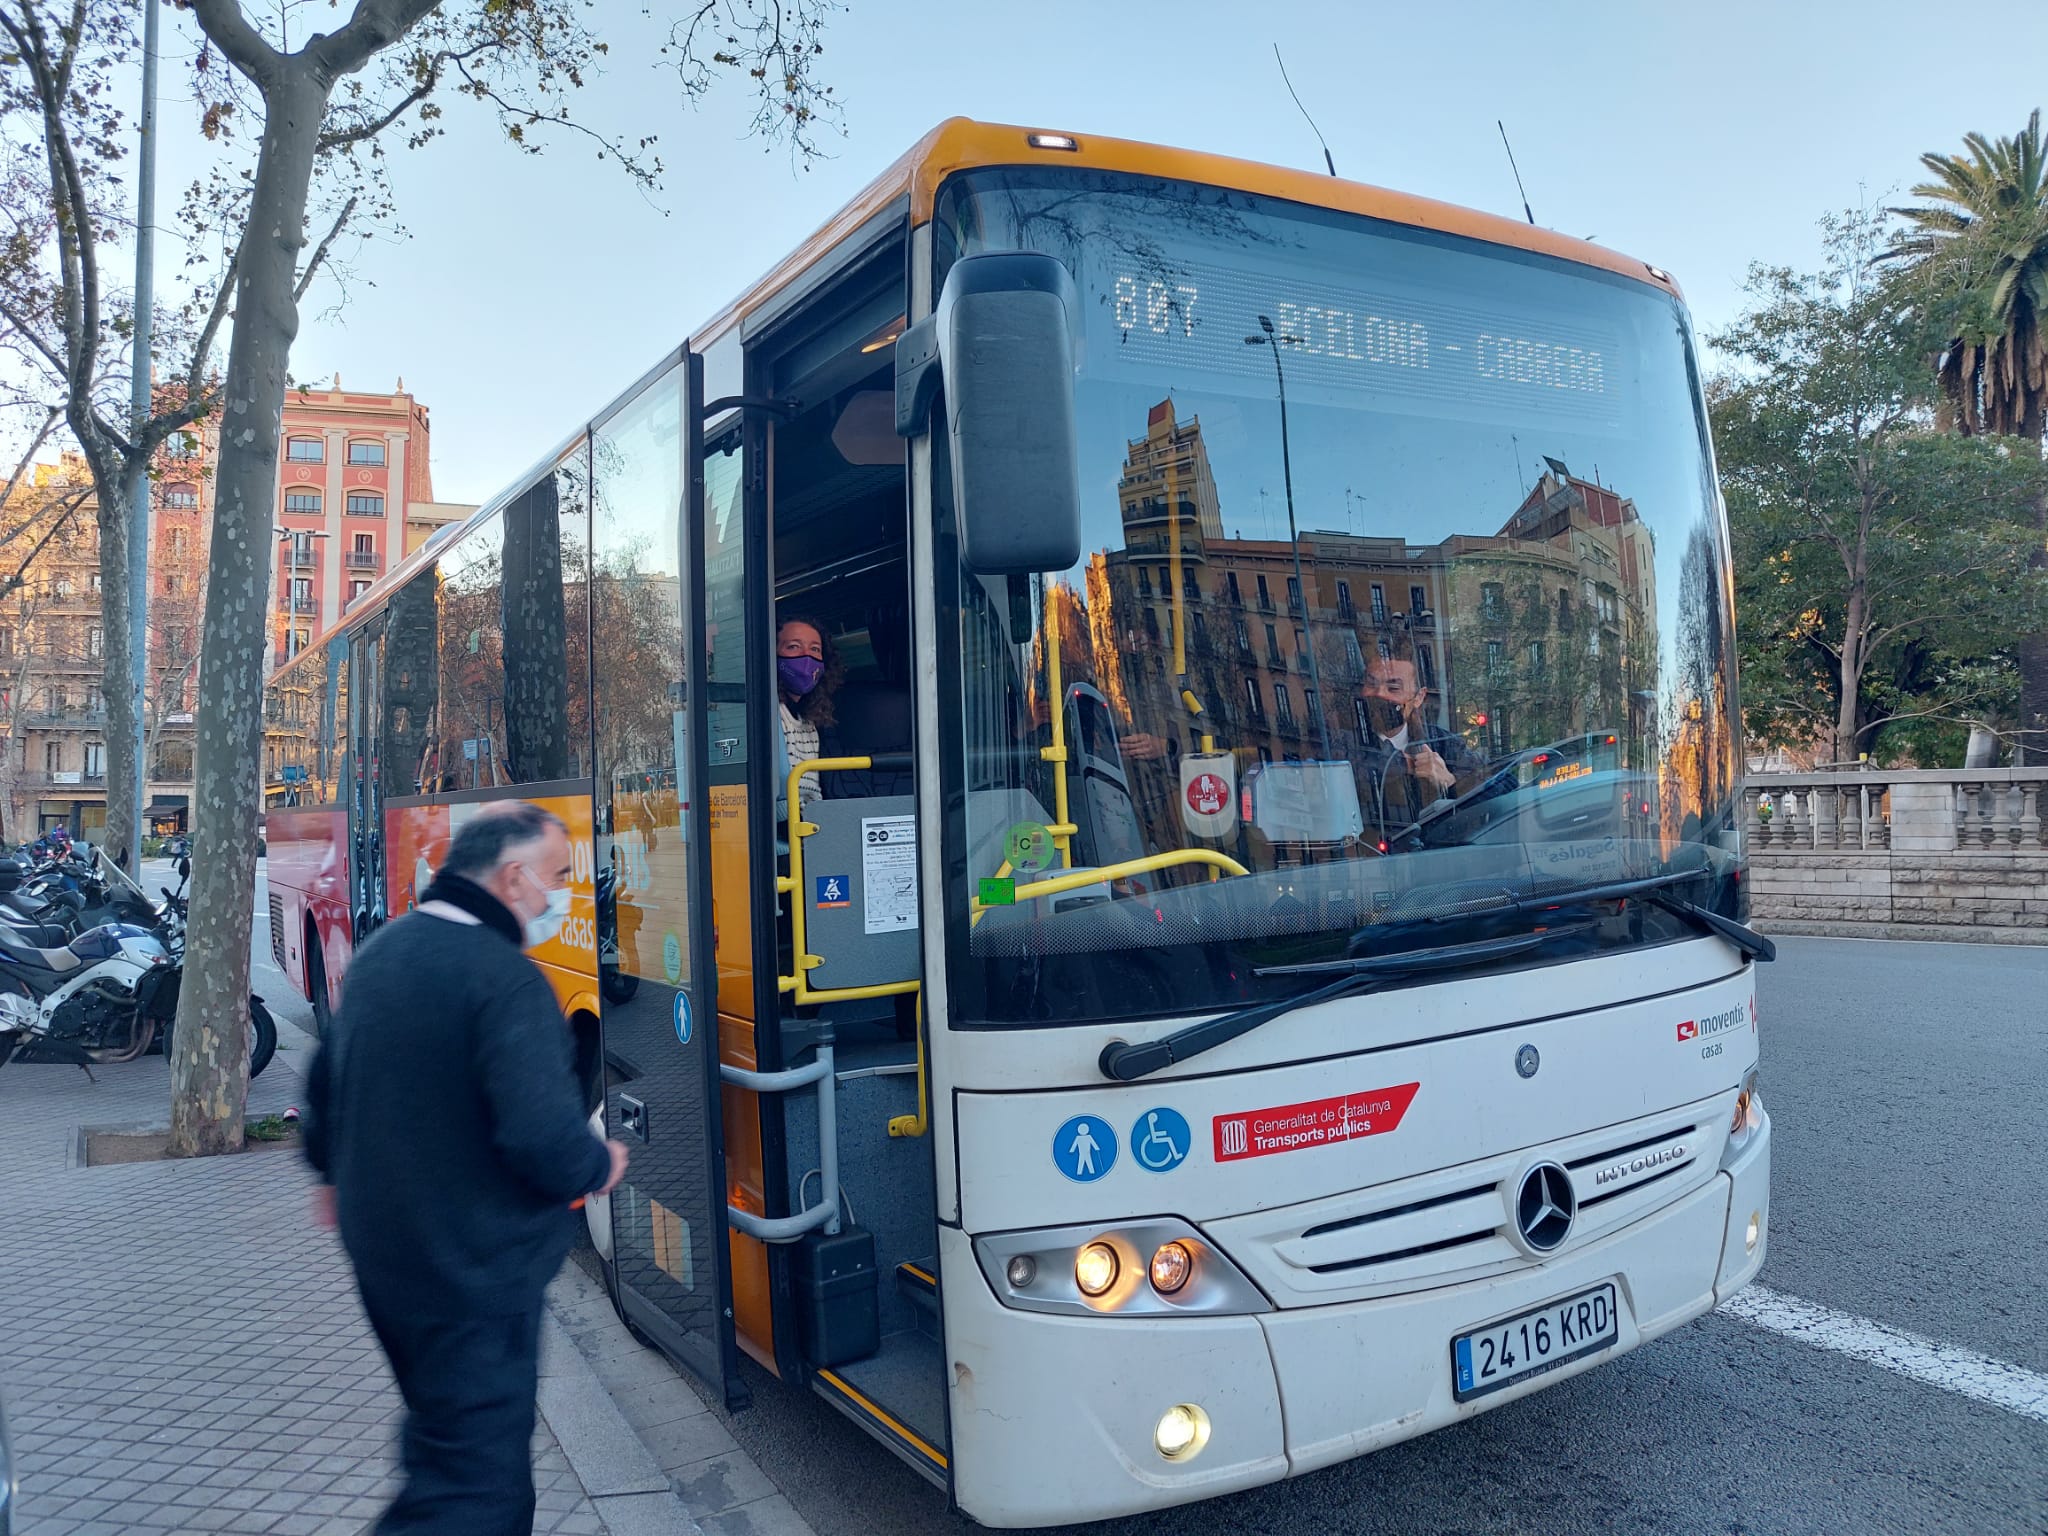 01 - Bus argentona - barcelona